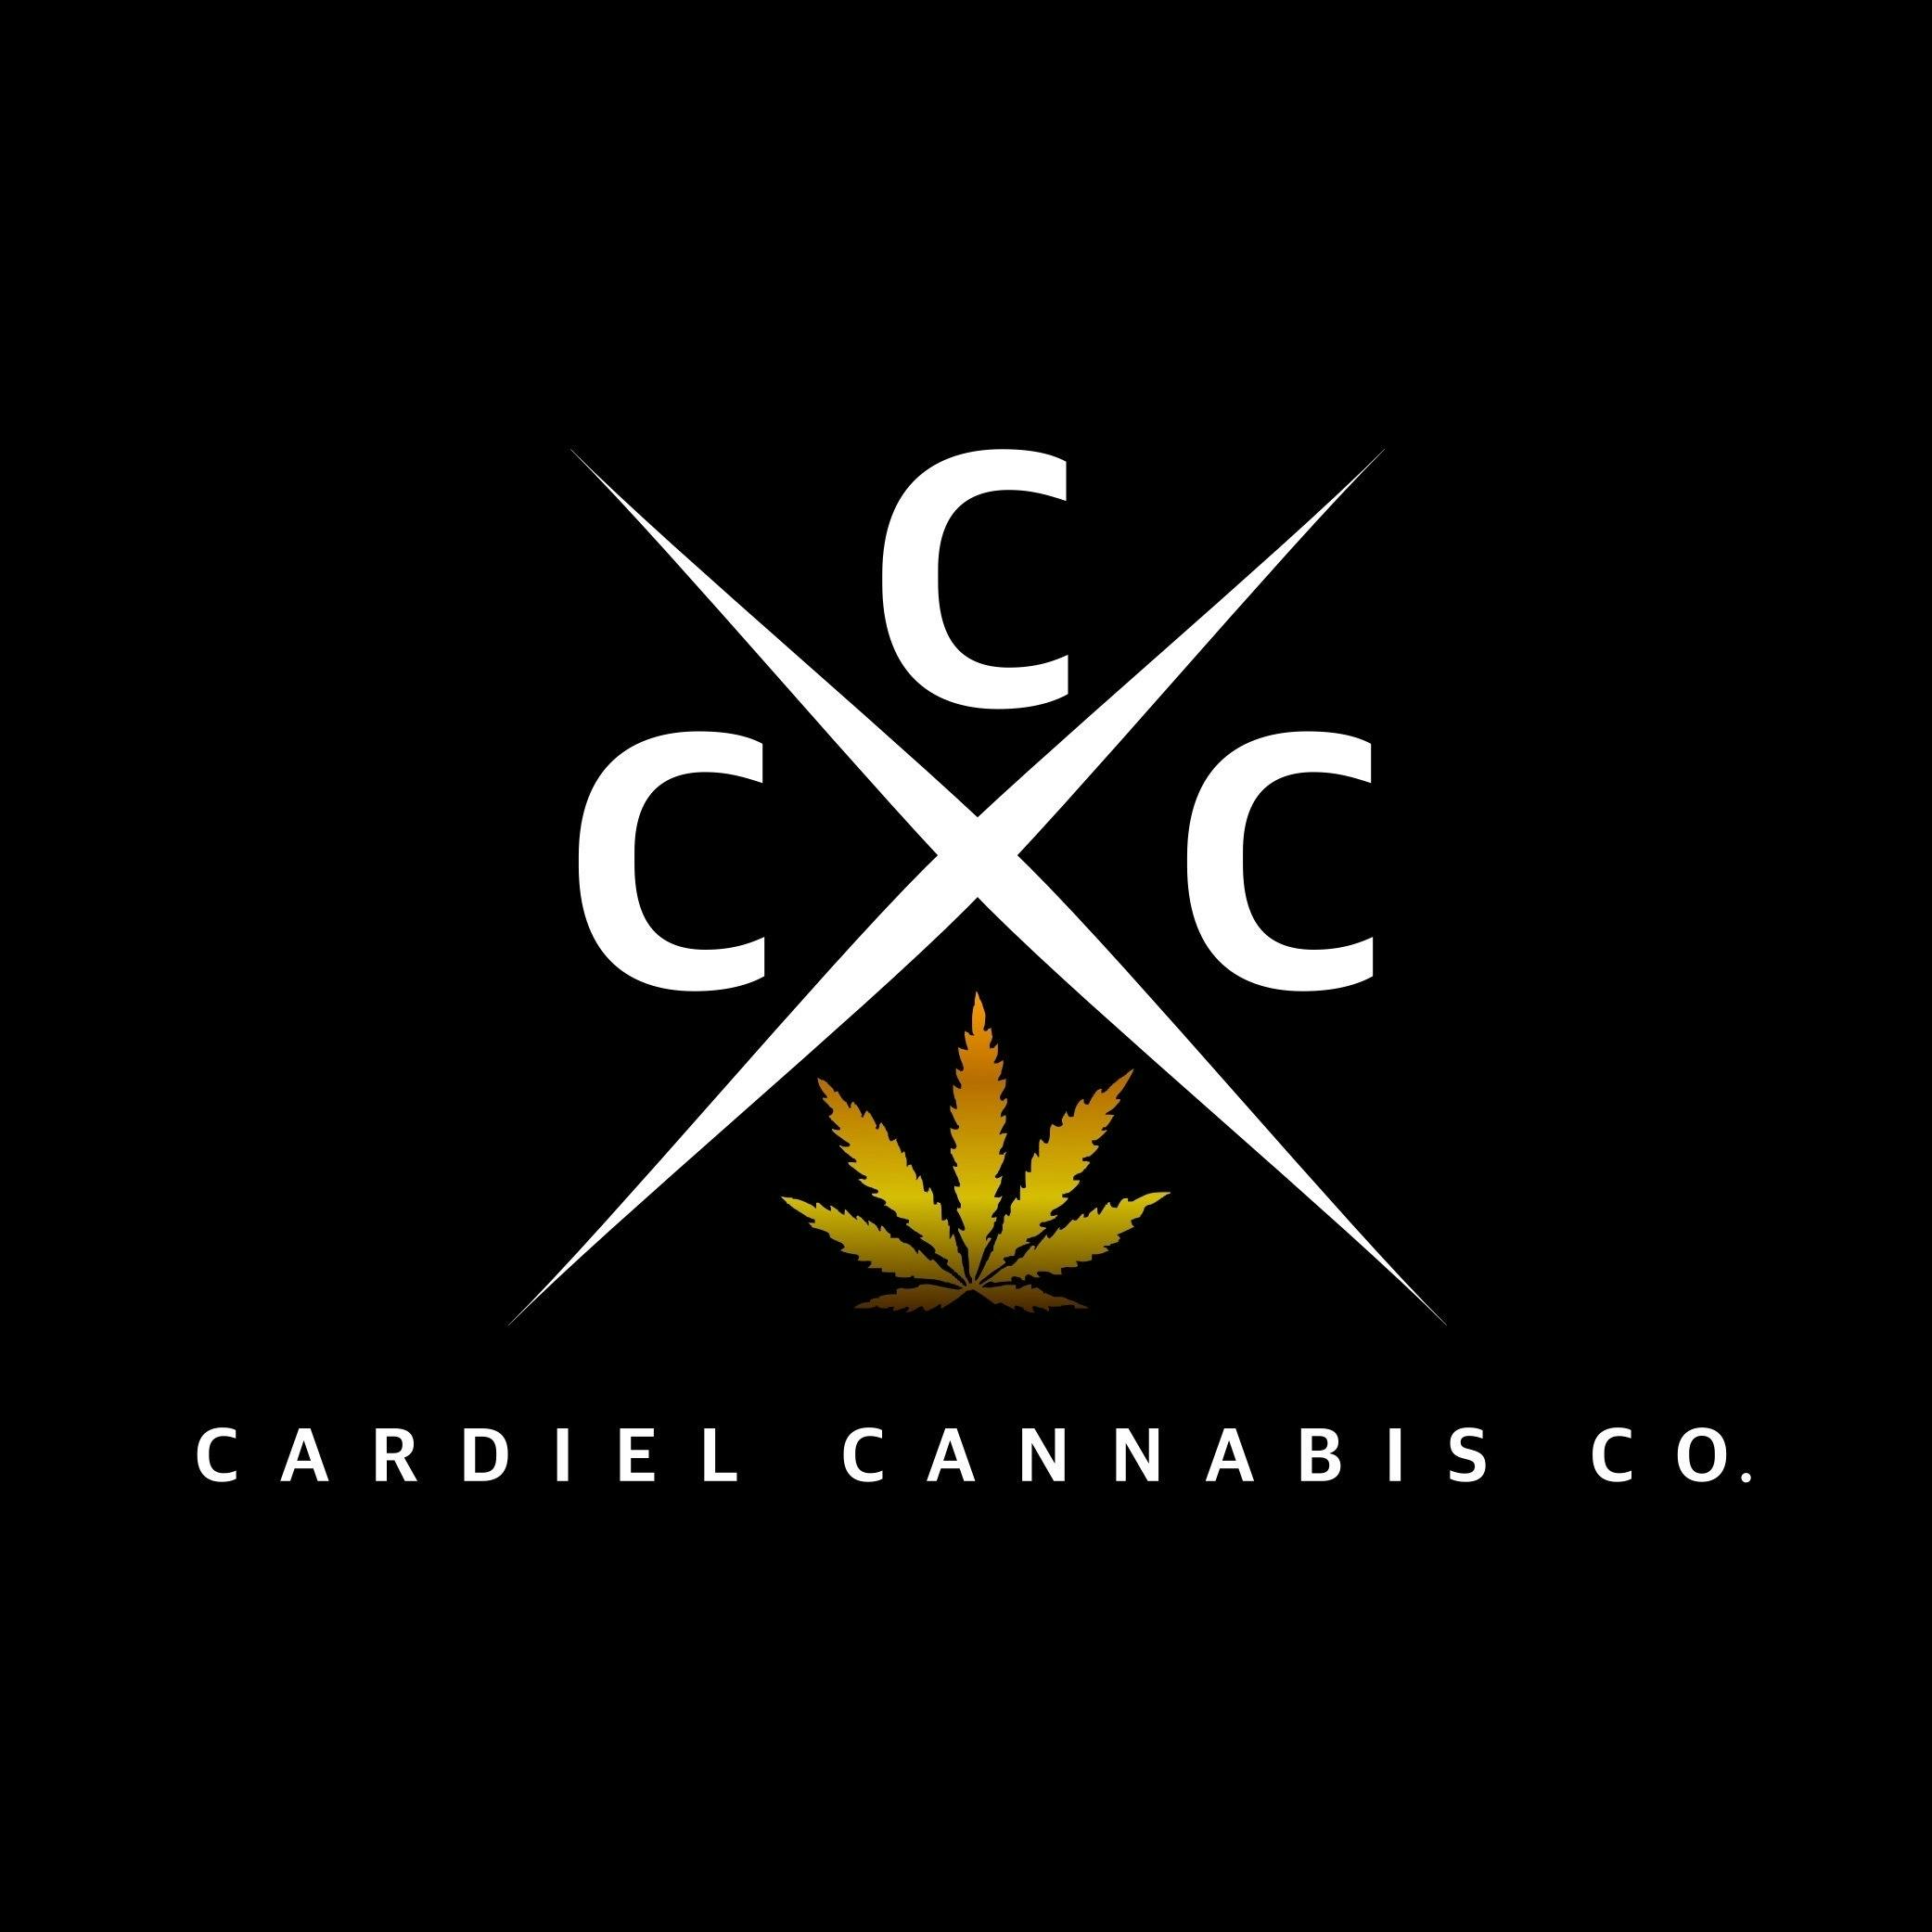 Cardiel Cannabis Co. logo